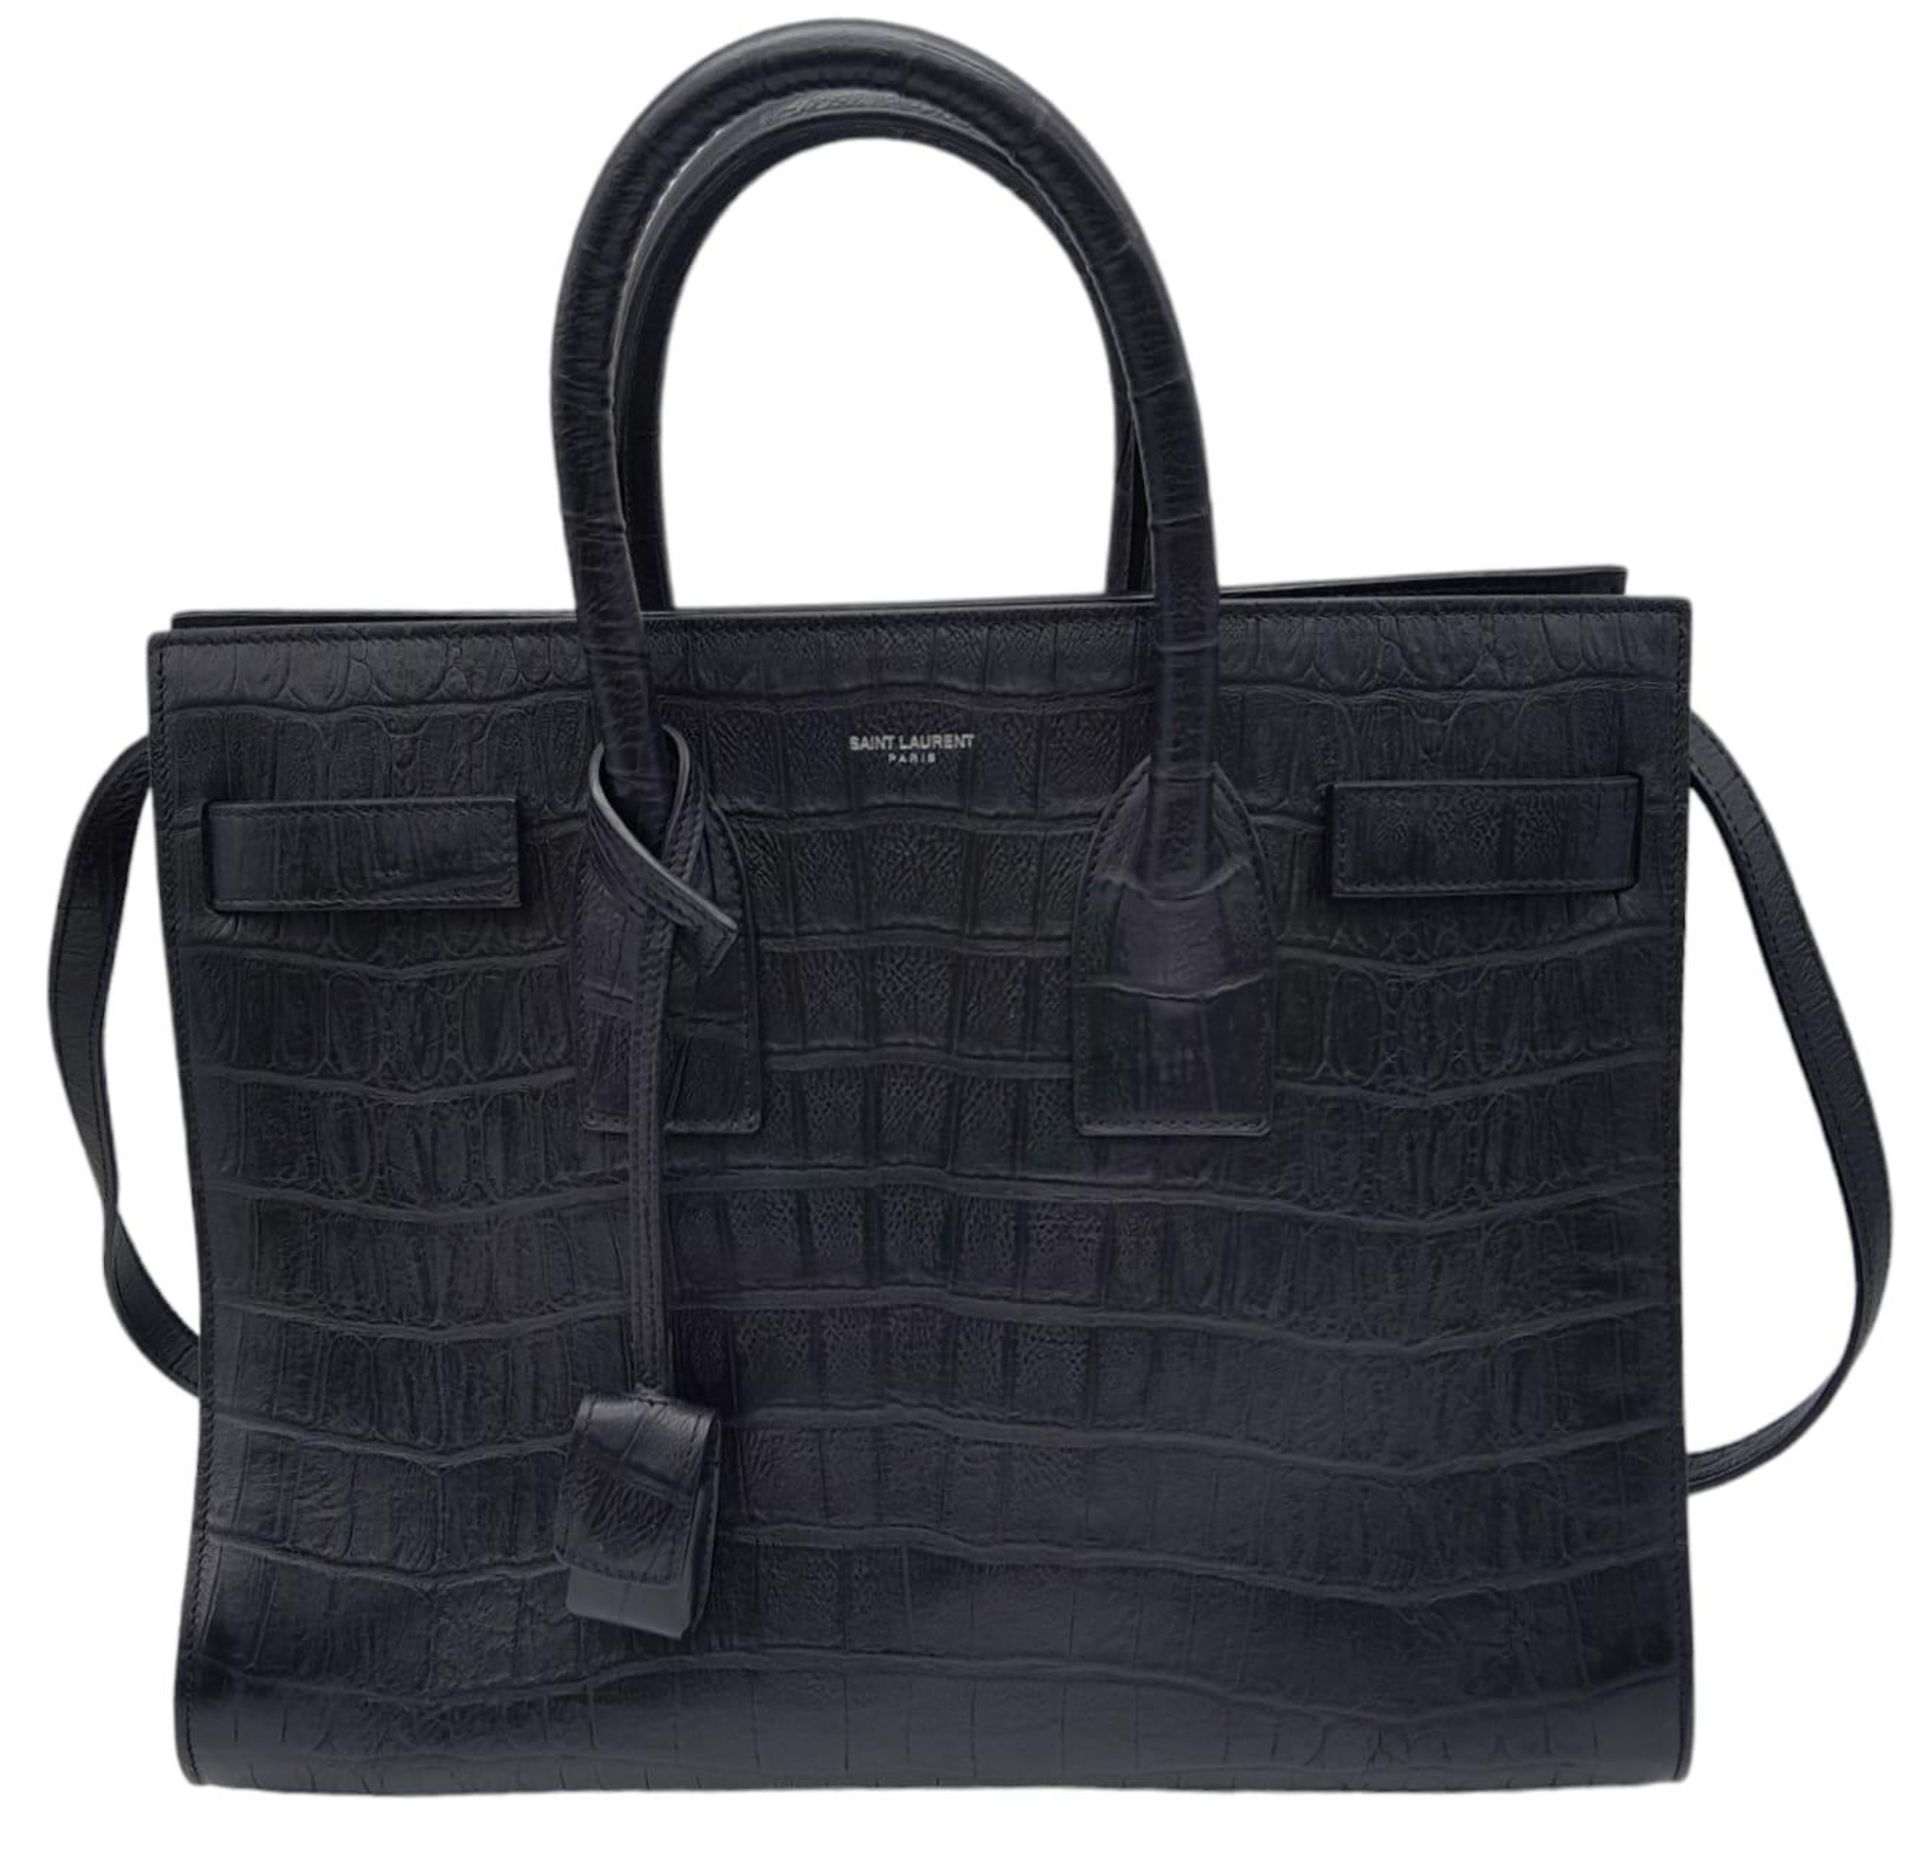 A Saint Laurent Sac de Jour Handbag. Crocodile embossed leather exterior with silver hardware and